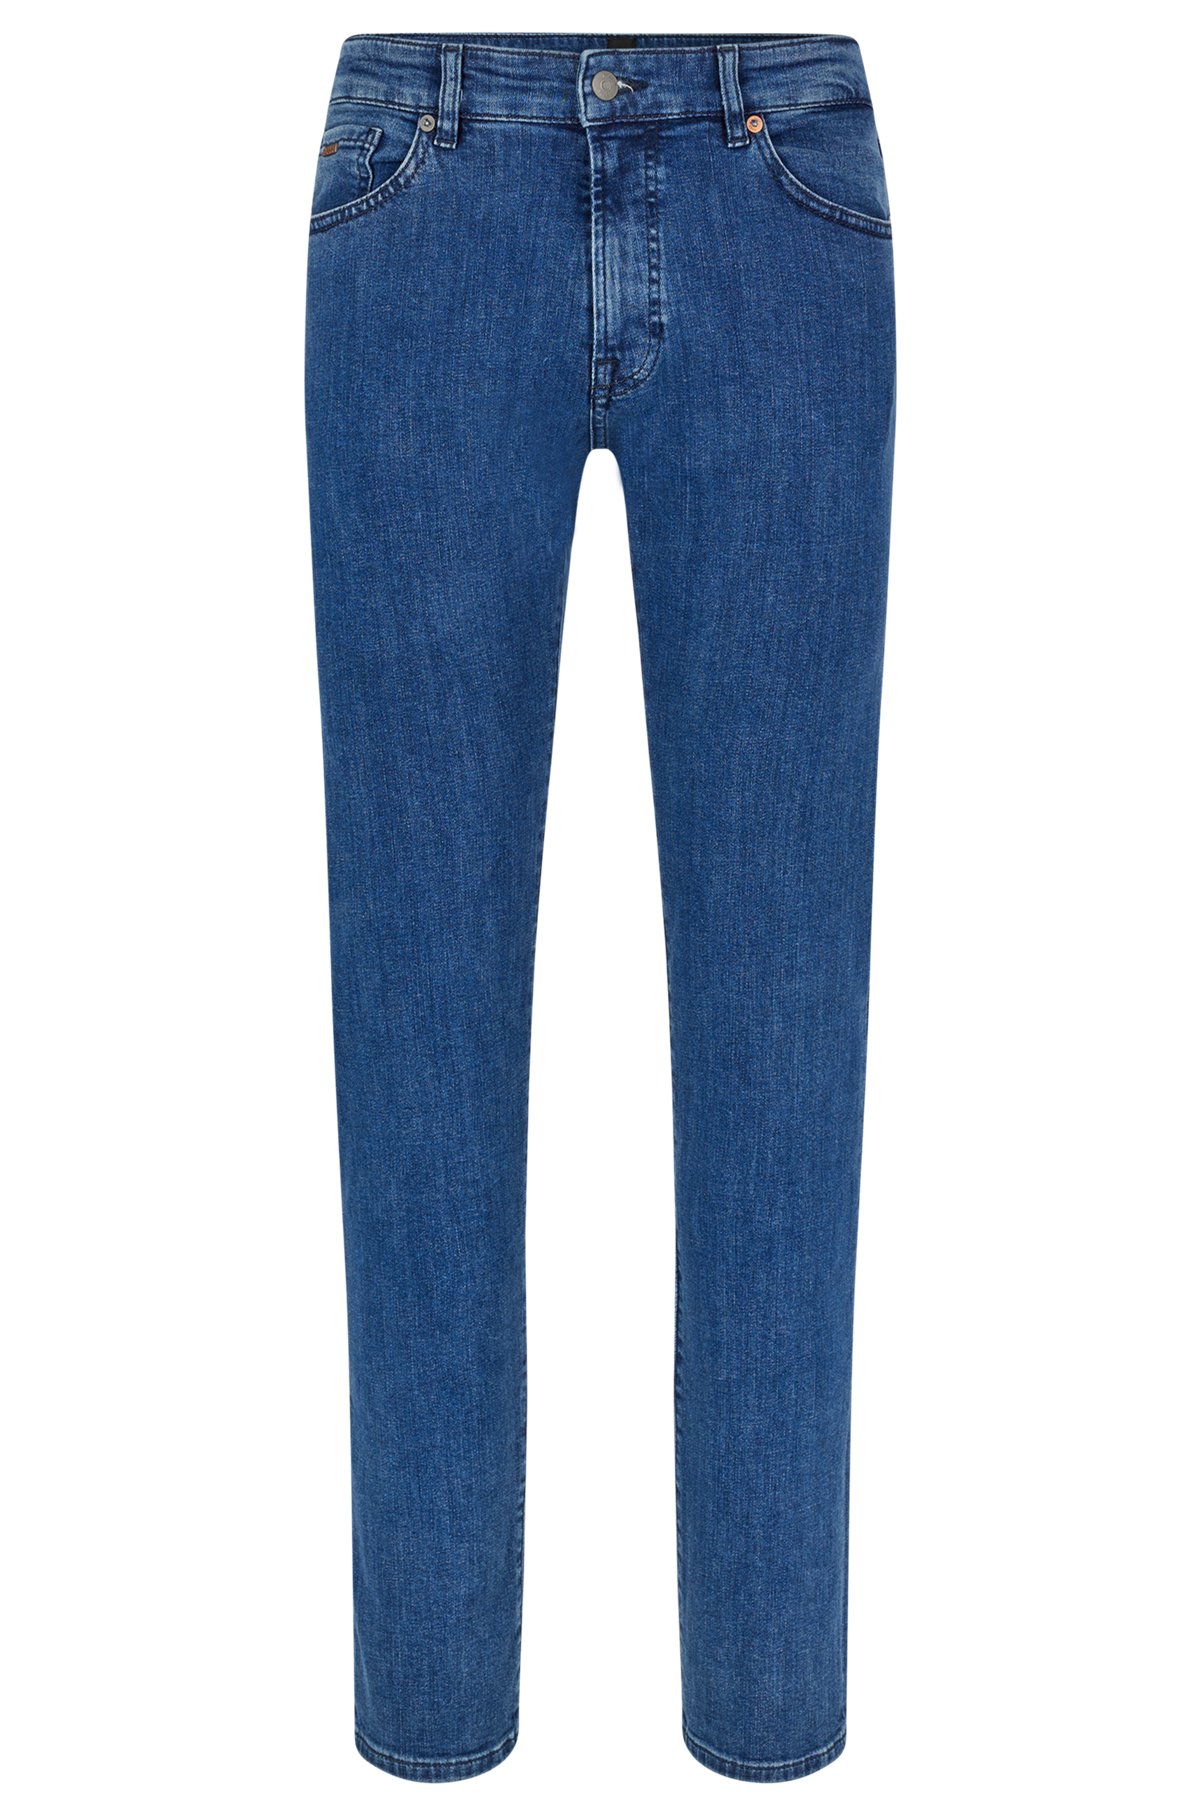 Regular-Fit Jeans aus blauem Super-Stretch-Denim, Blau